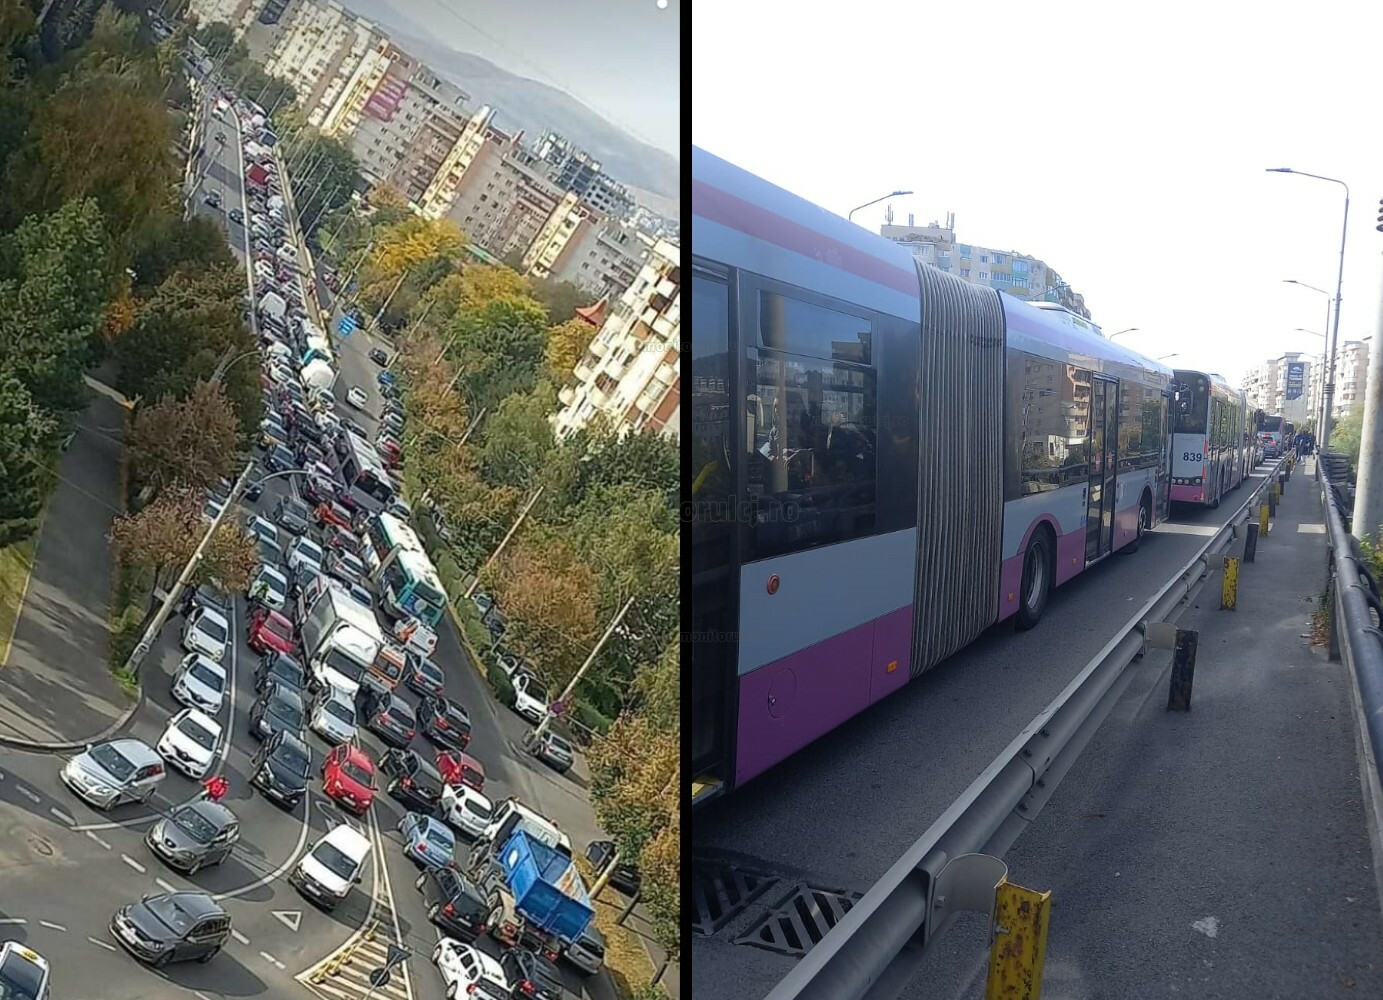 Trafic foarte aglomerat pe Calea Florești / Foto 1: Info Trafic Cluj-Napoca / Foto 2: monitorulcj.ro